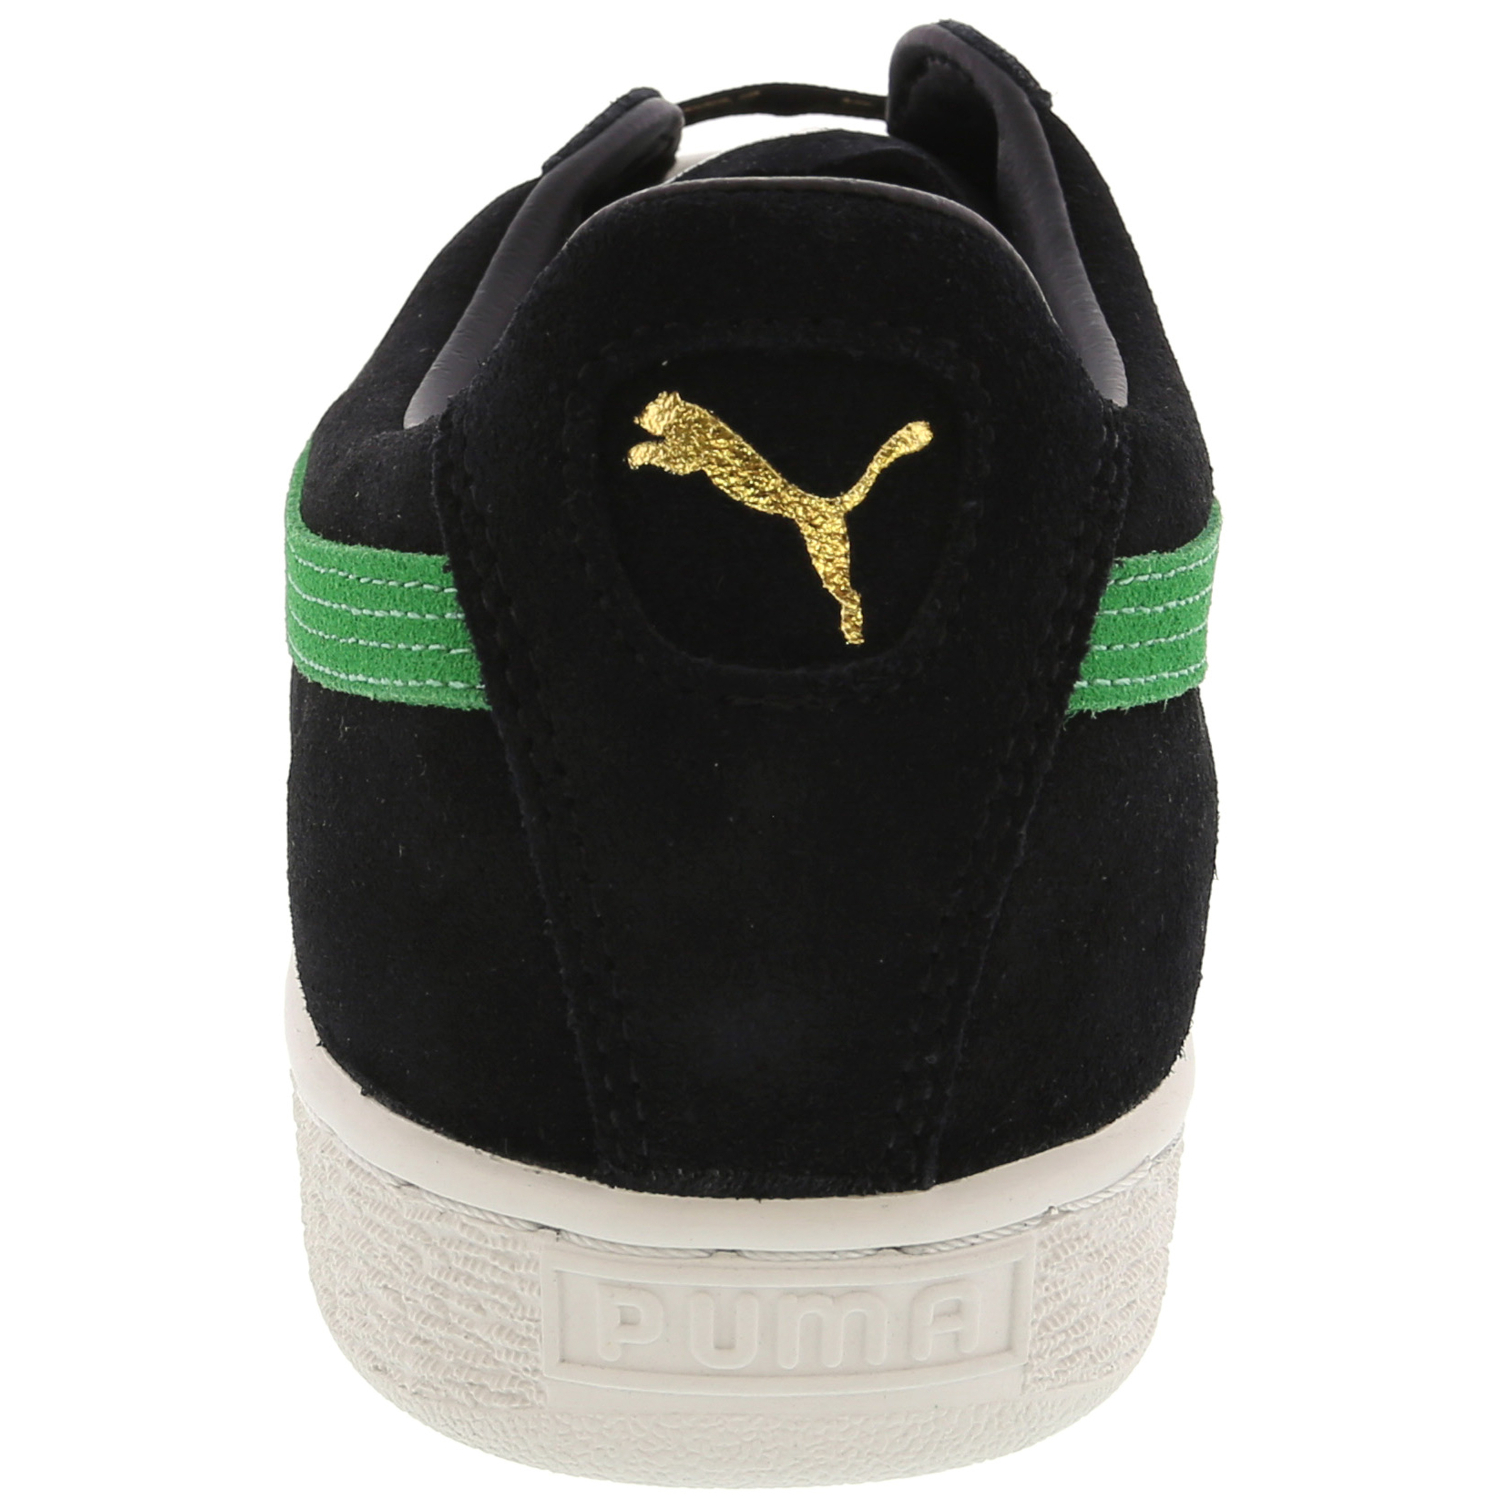 Puma Men's Suede Classic X Xlarge Ankle-High Fashion Sneaker | eBay